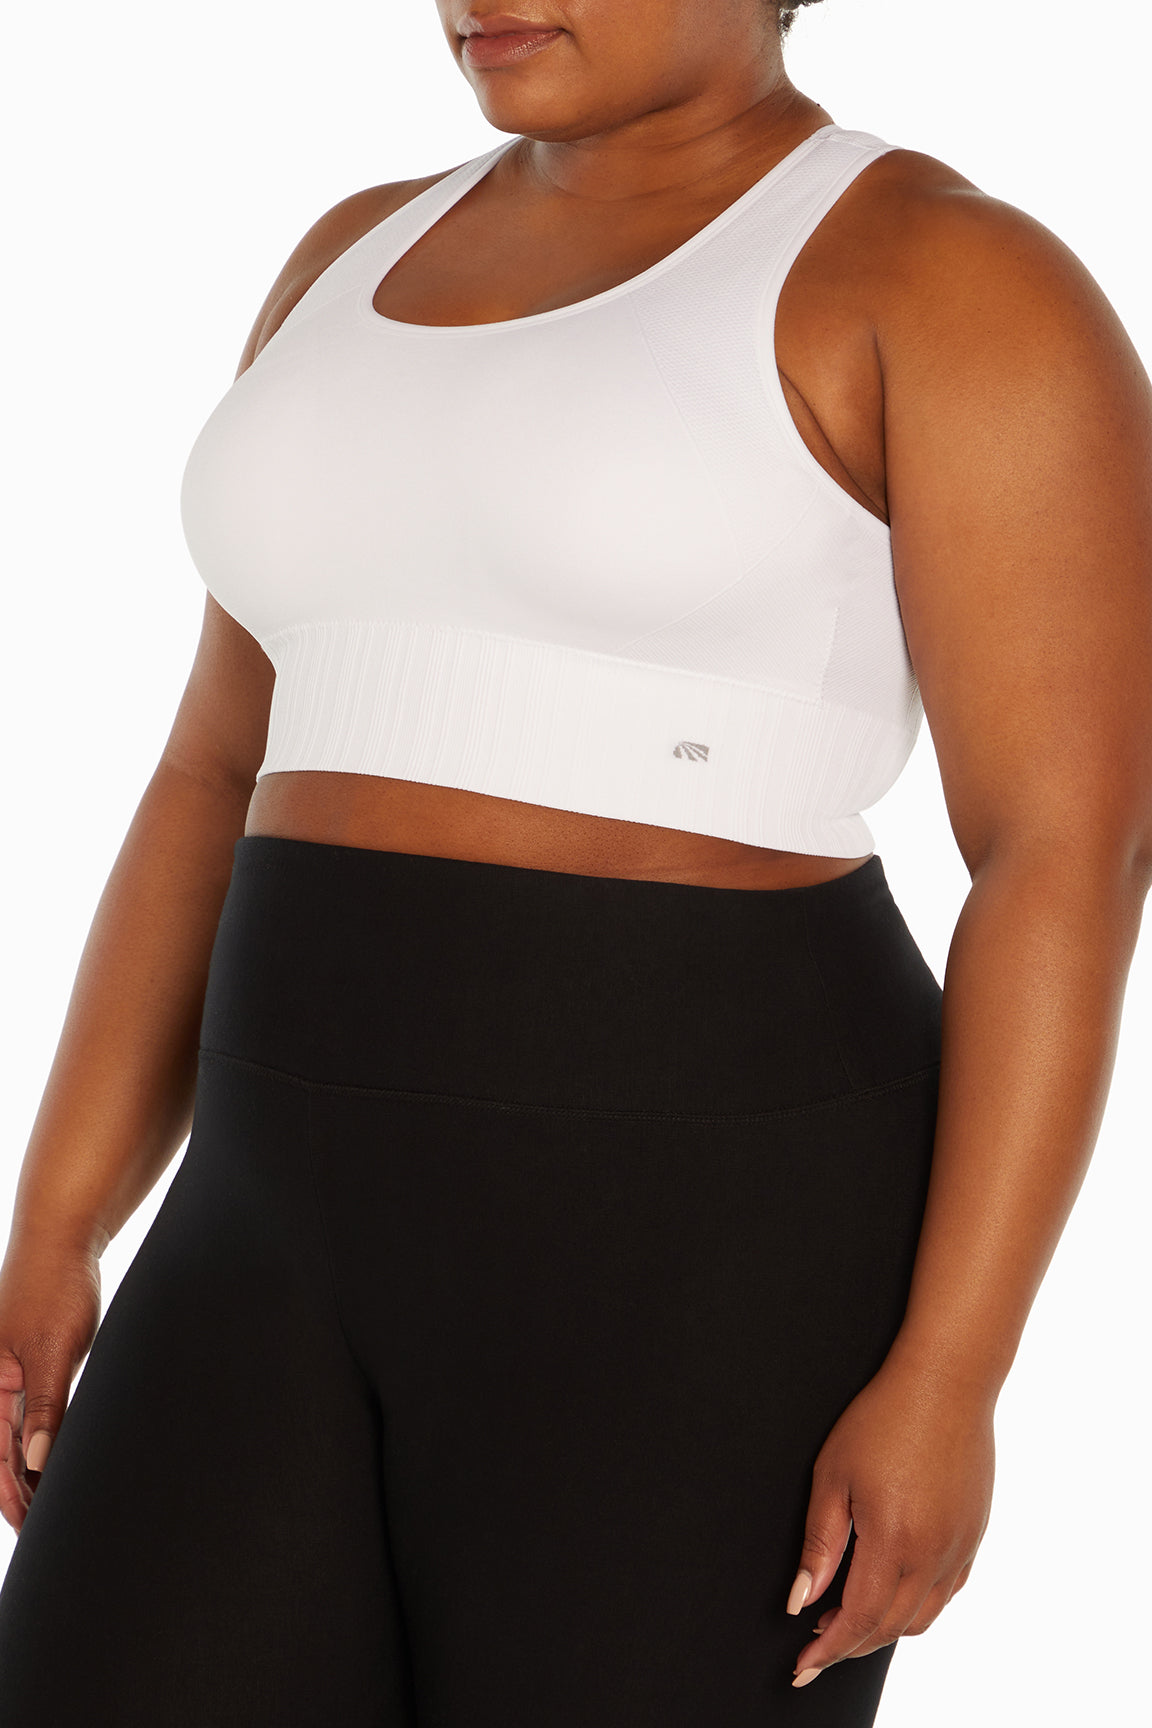 MARIKA Women's Black Medium Impact Dry-Wik Sports Bra #377T Medium NWT